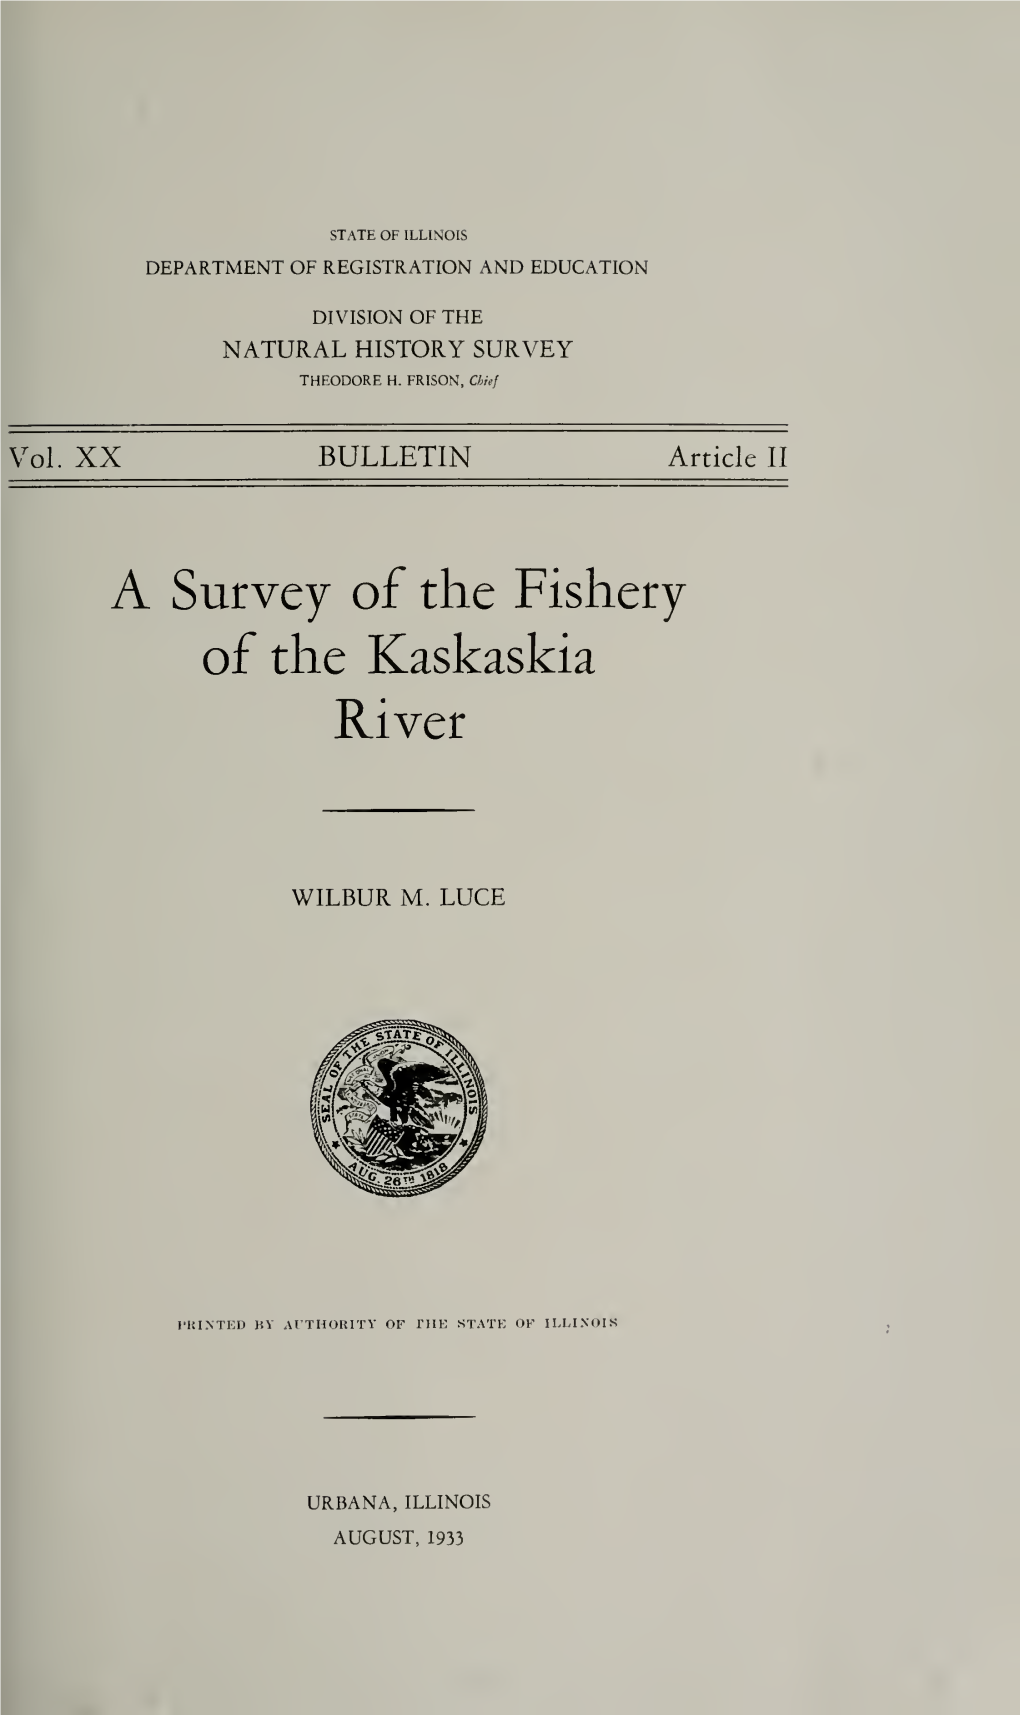 Of the Kaskaskia River